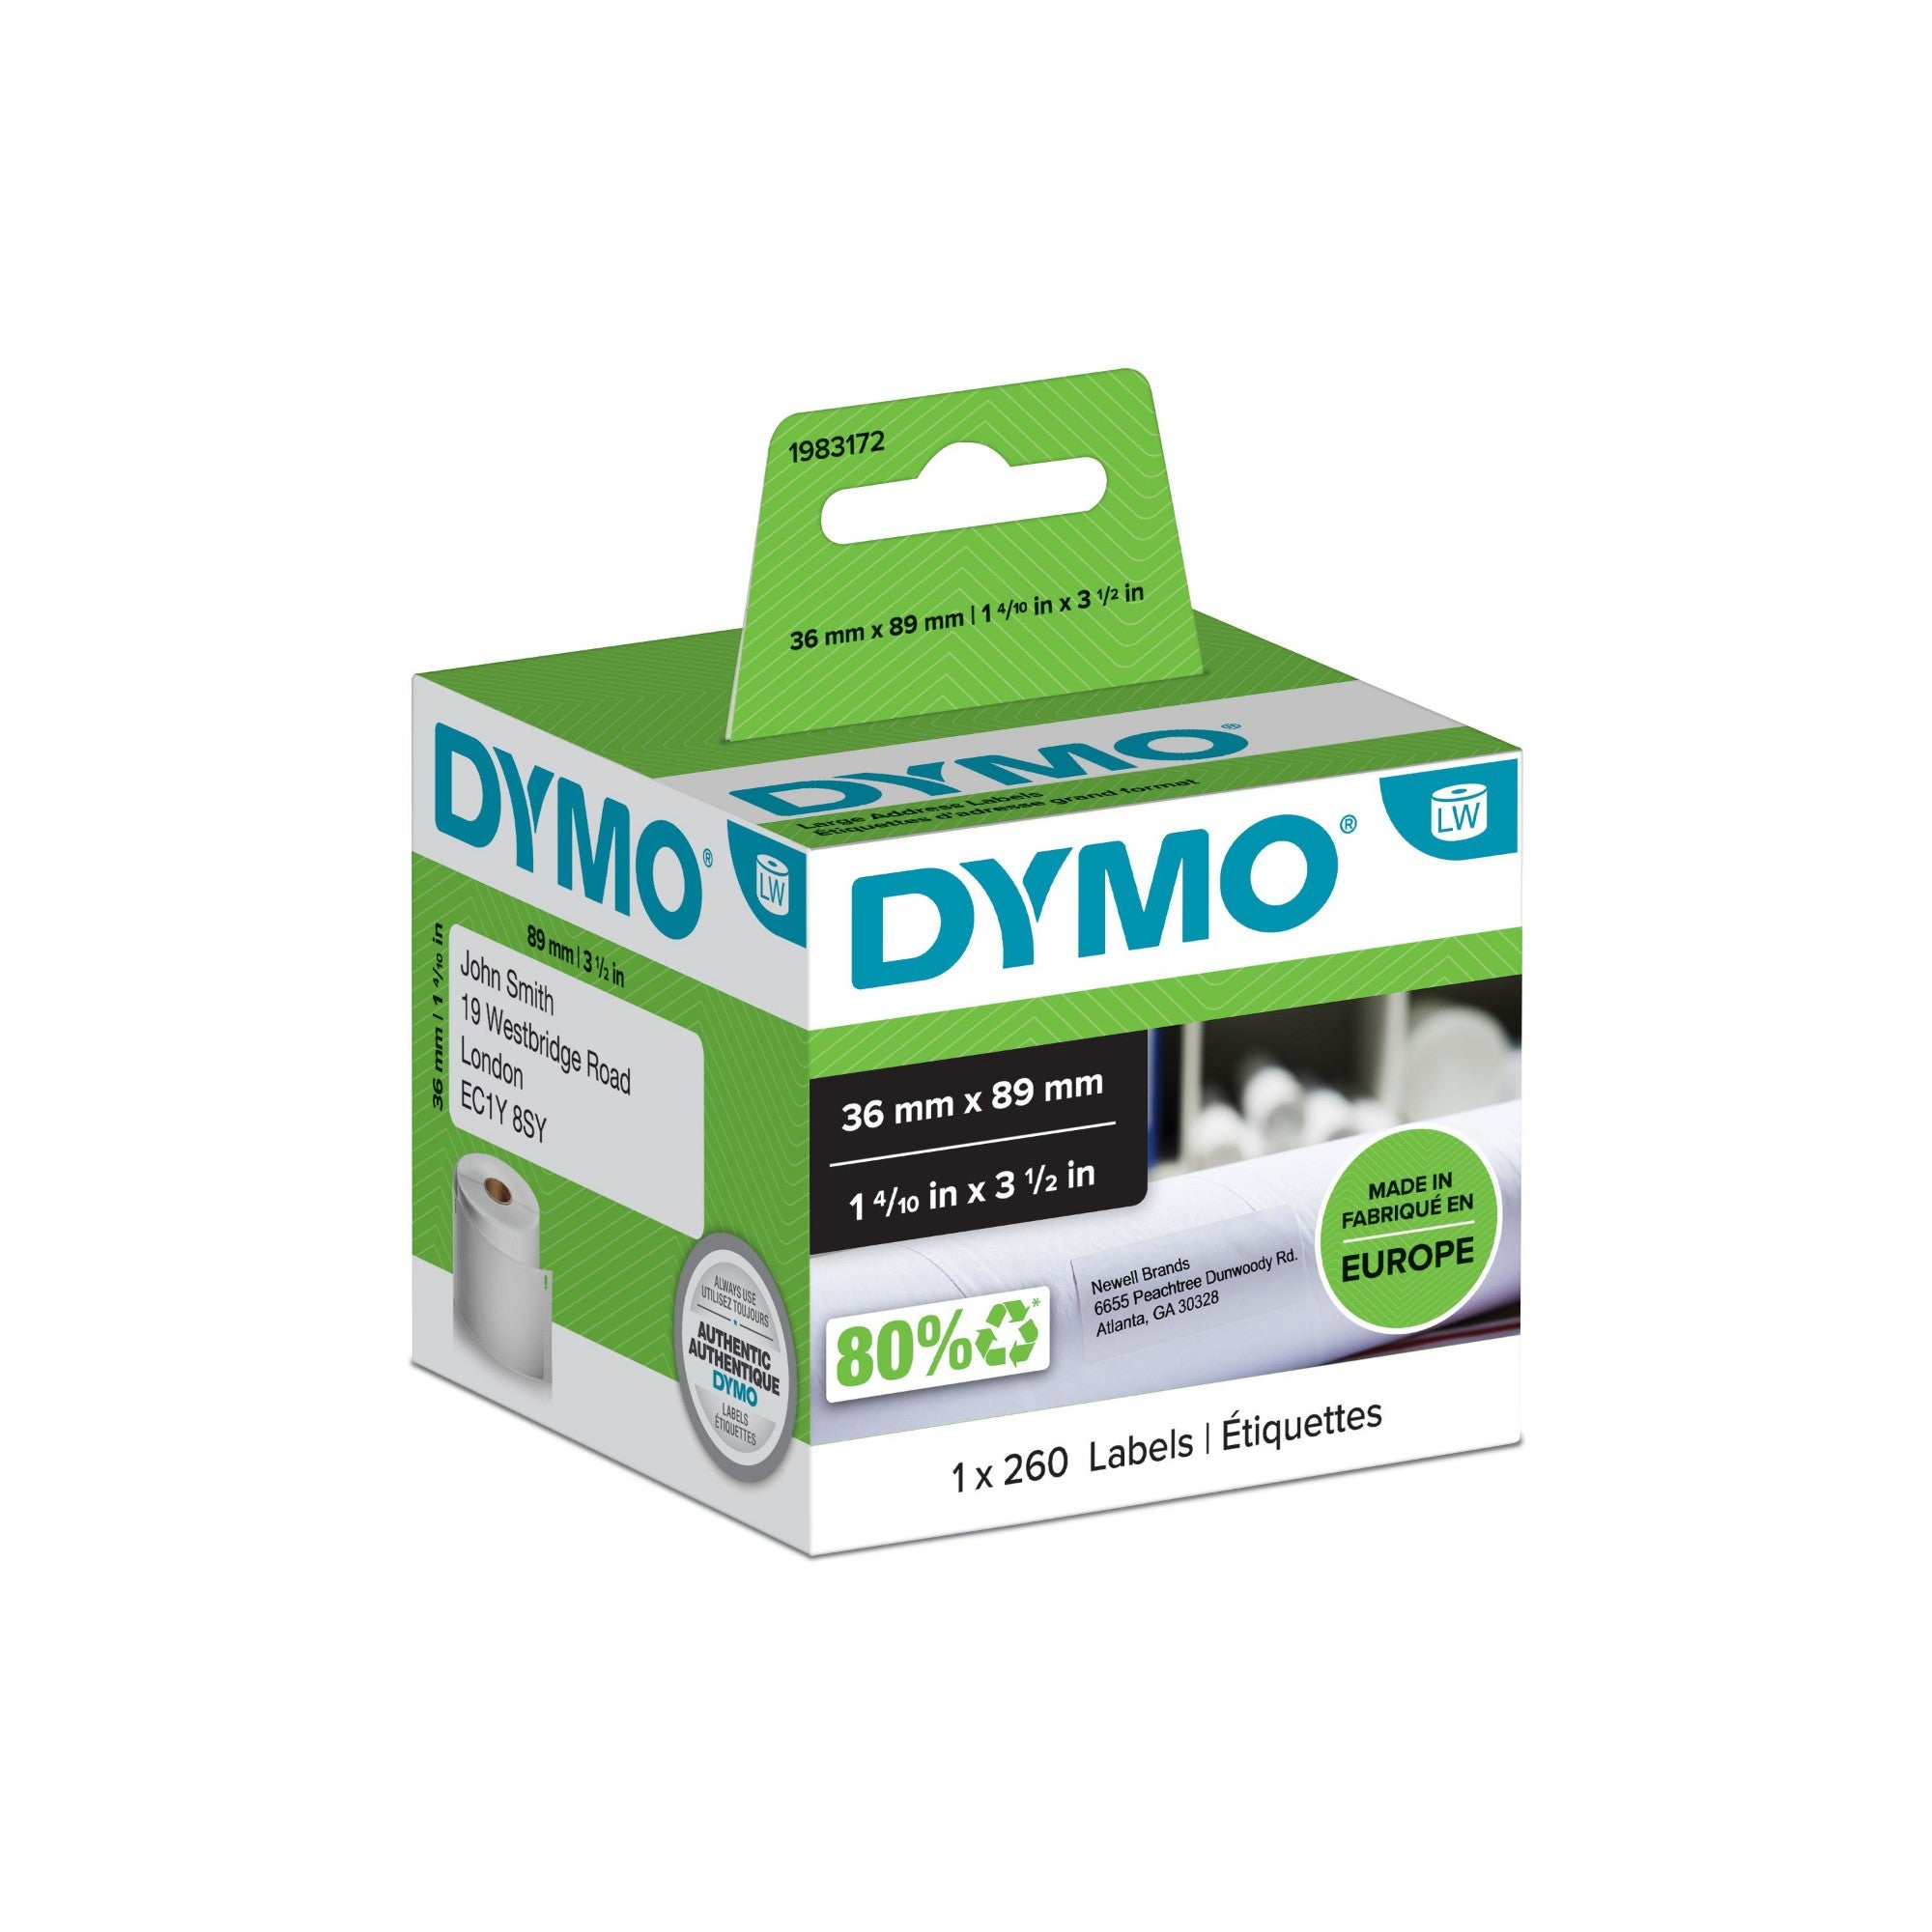 Dymo 1983172 DirectLabel-etikettes white 36mm x 89mm Pack=260 for Dymo Etiketten 10cm/LW 550 60mm/60mm